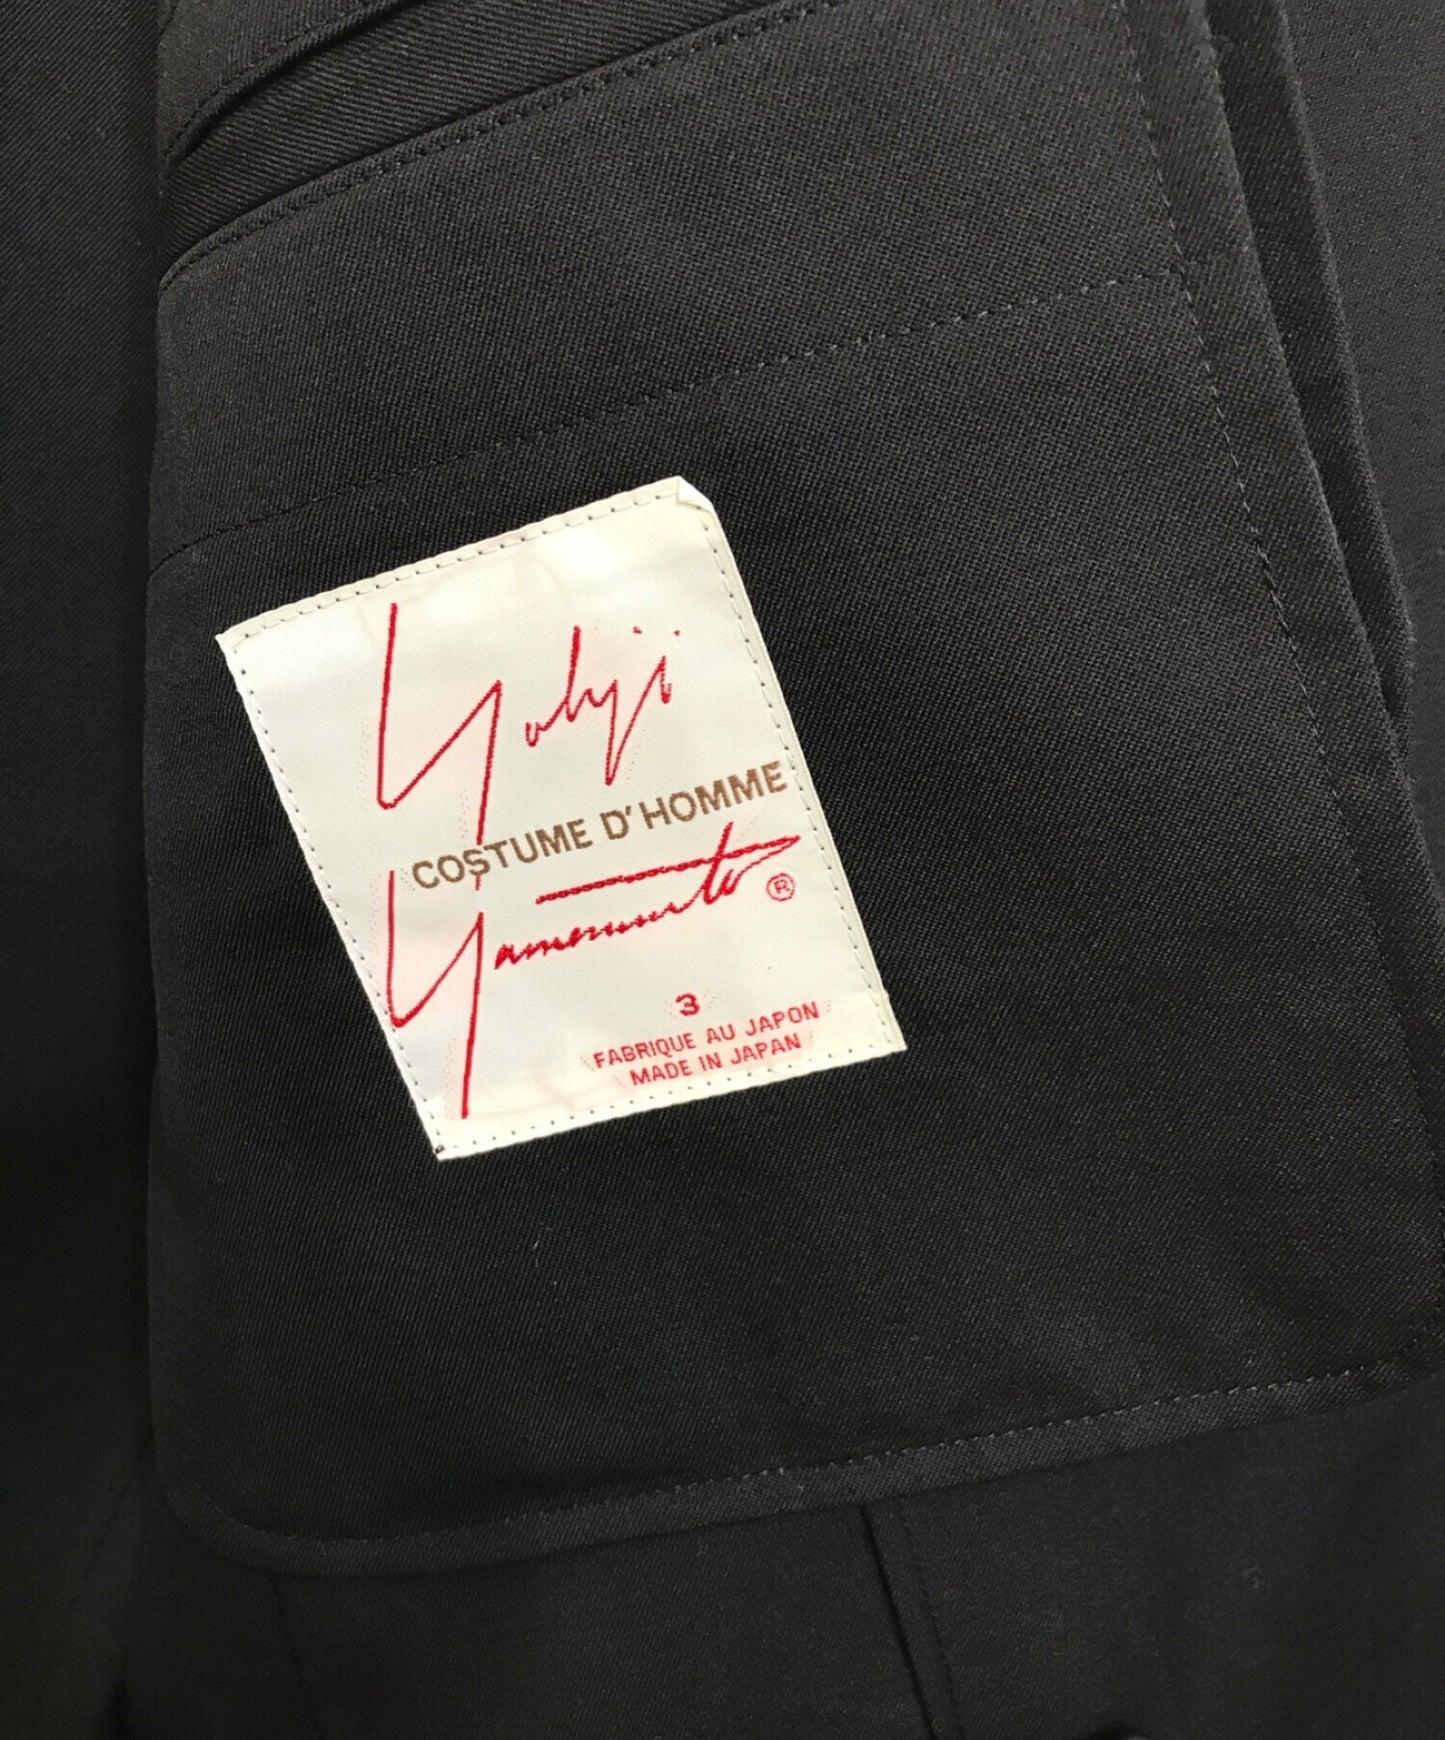 Yohji Yamamoto Costume D 'Homme 테일러드 재킷